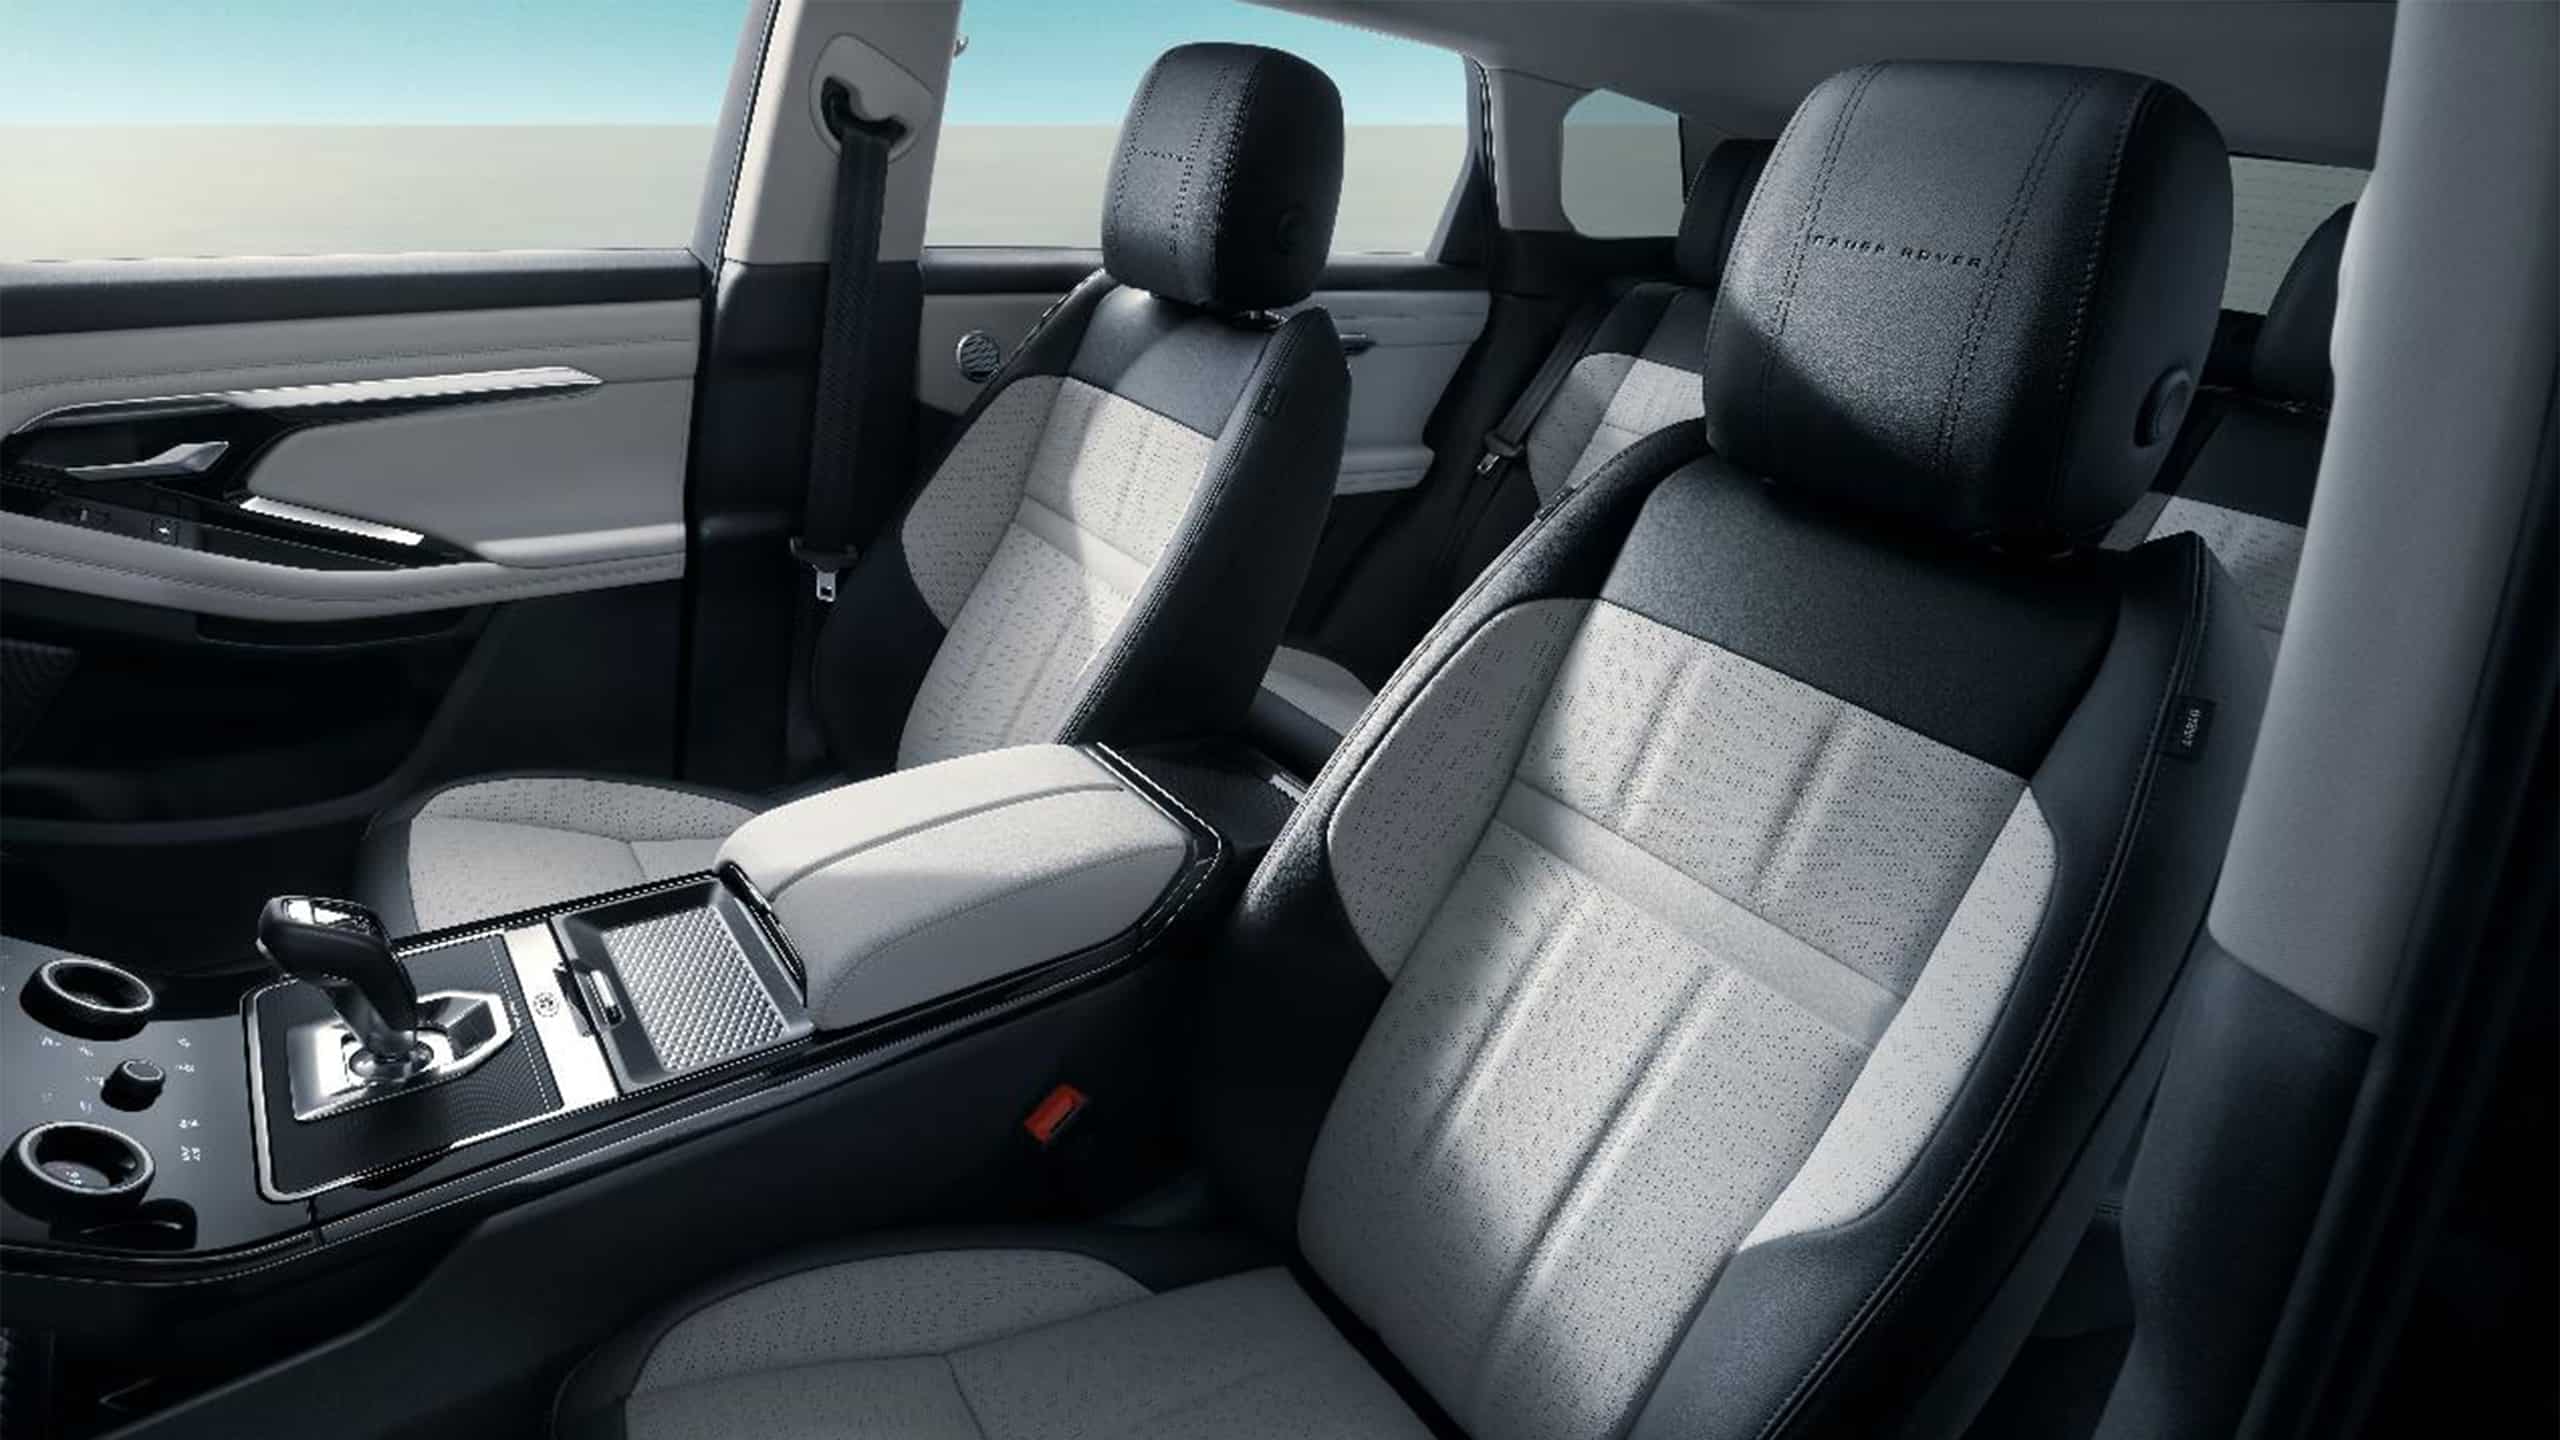 Range Rover Evoque front seat